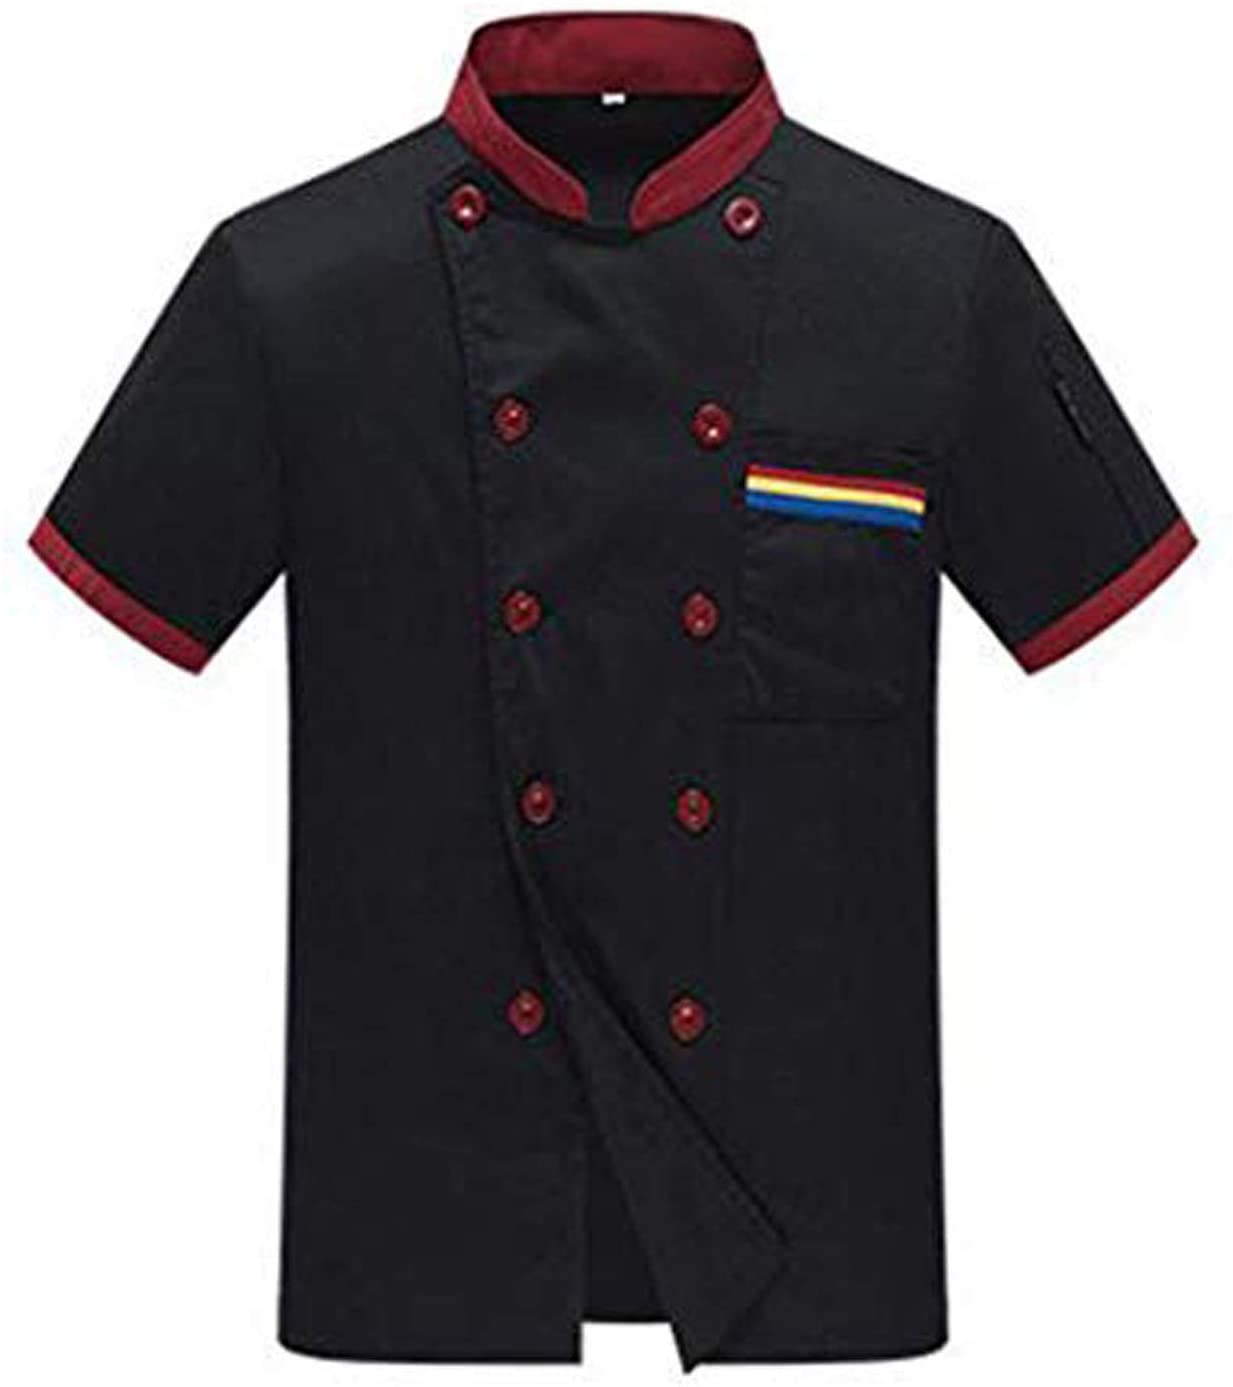 Unisex Short Sleeves Chef Jacket Coat Stand Collar Chef Jacket Coat Cooker Work Restaurant Uniforms Tops White M